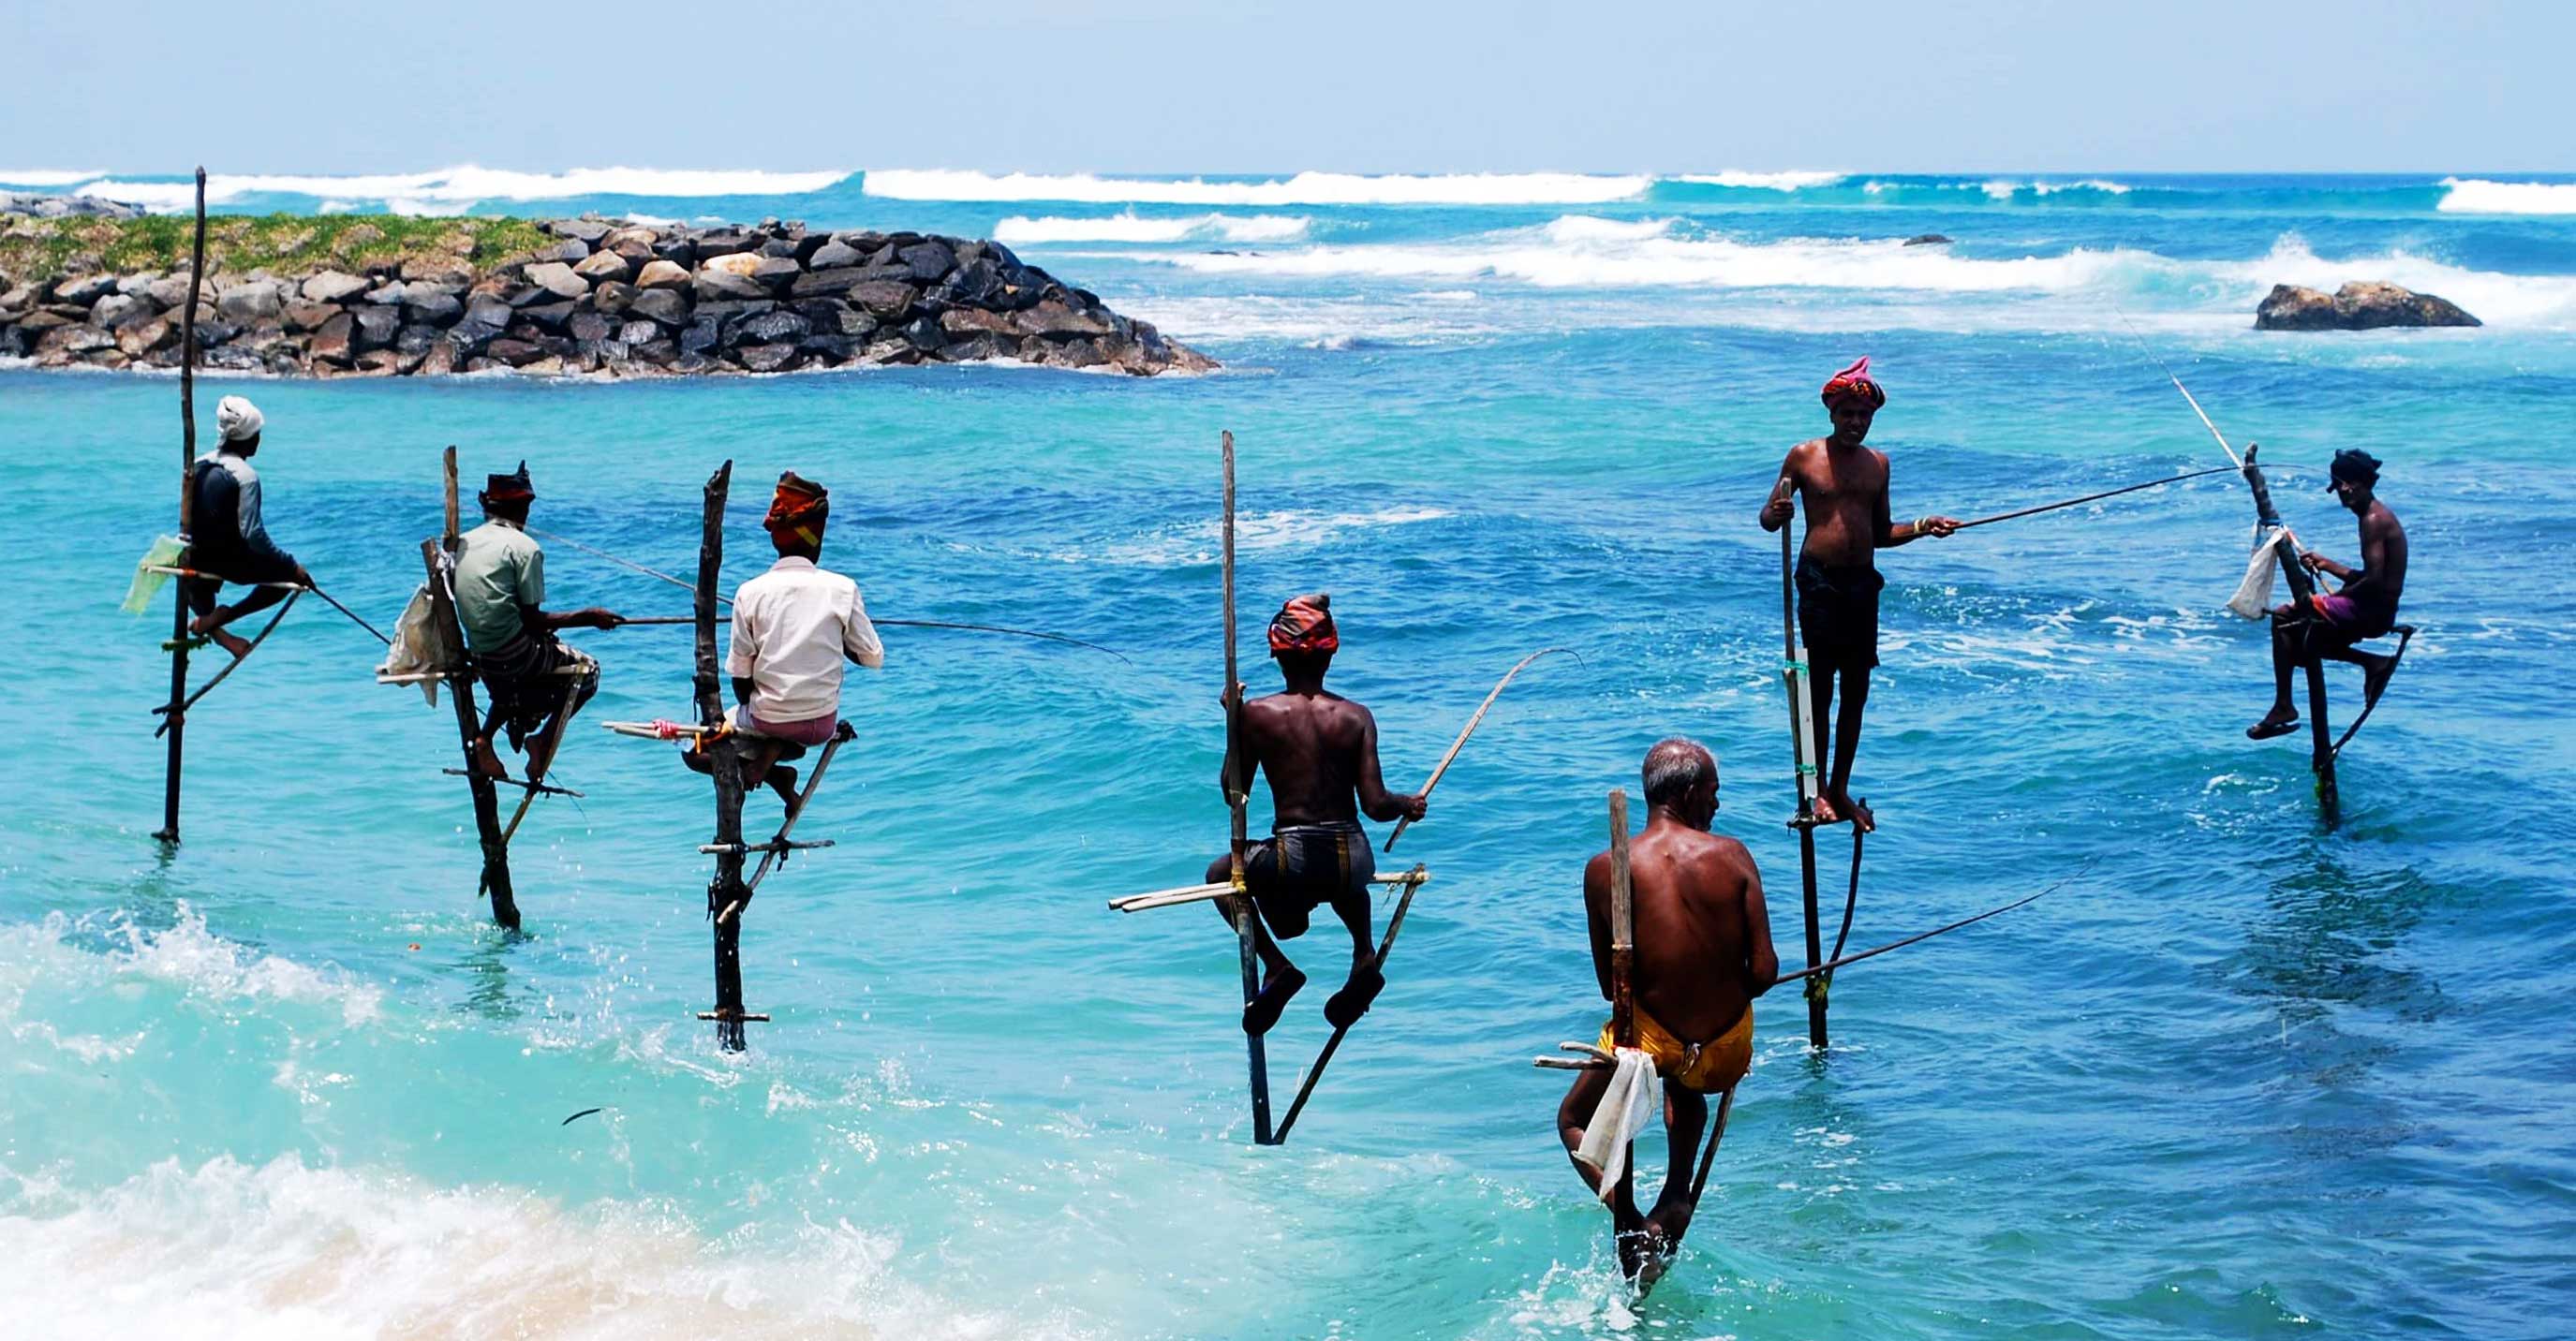 Сколько можно на шри ланке. Велигама Шри Ланка. Шри Ланка рыбалка. Рыбаки на Шри Ланке на шестах. Рыбаки на Шри Ланке.